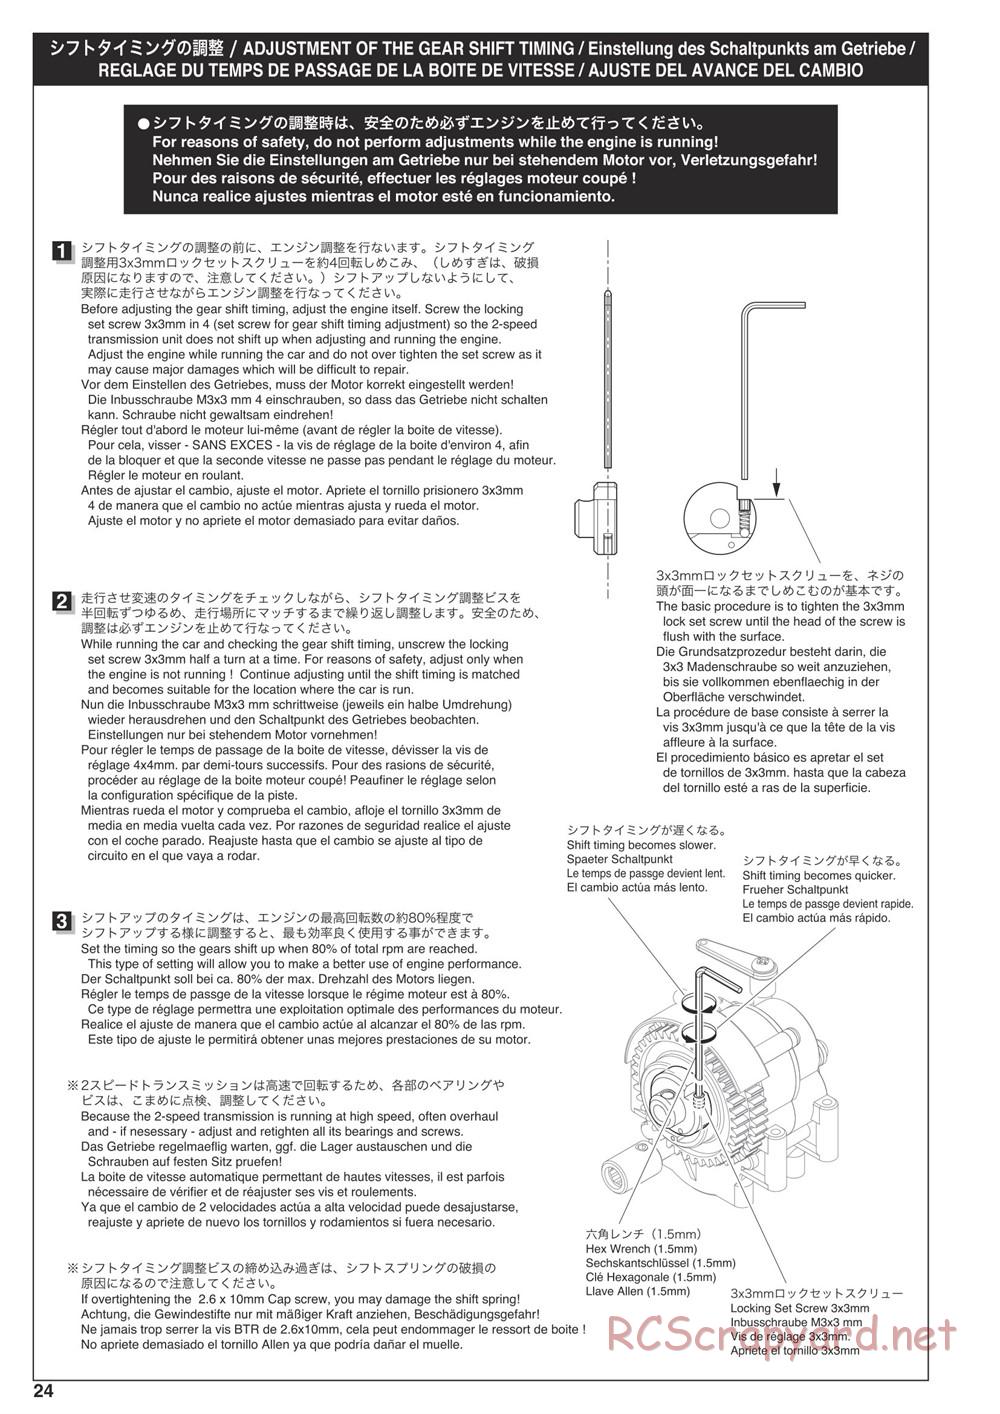 Kyosho - Nitro Tracker (2019) - Manual - Page 24